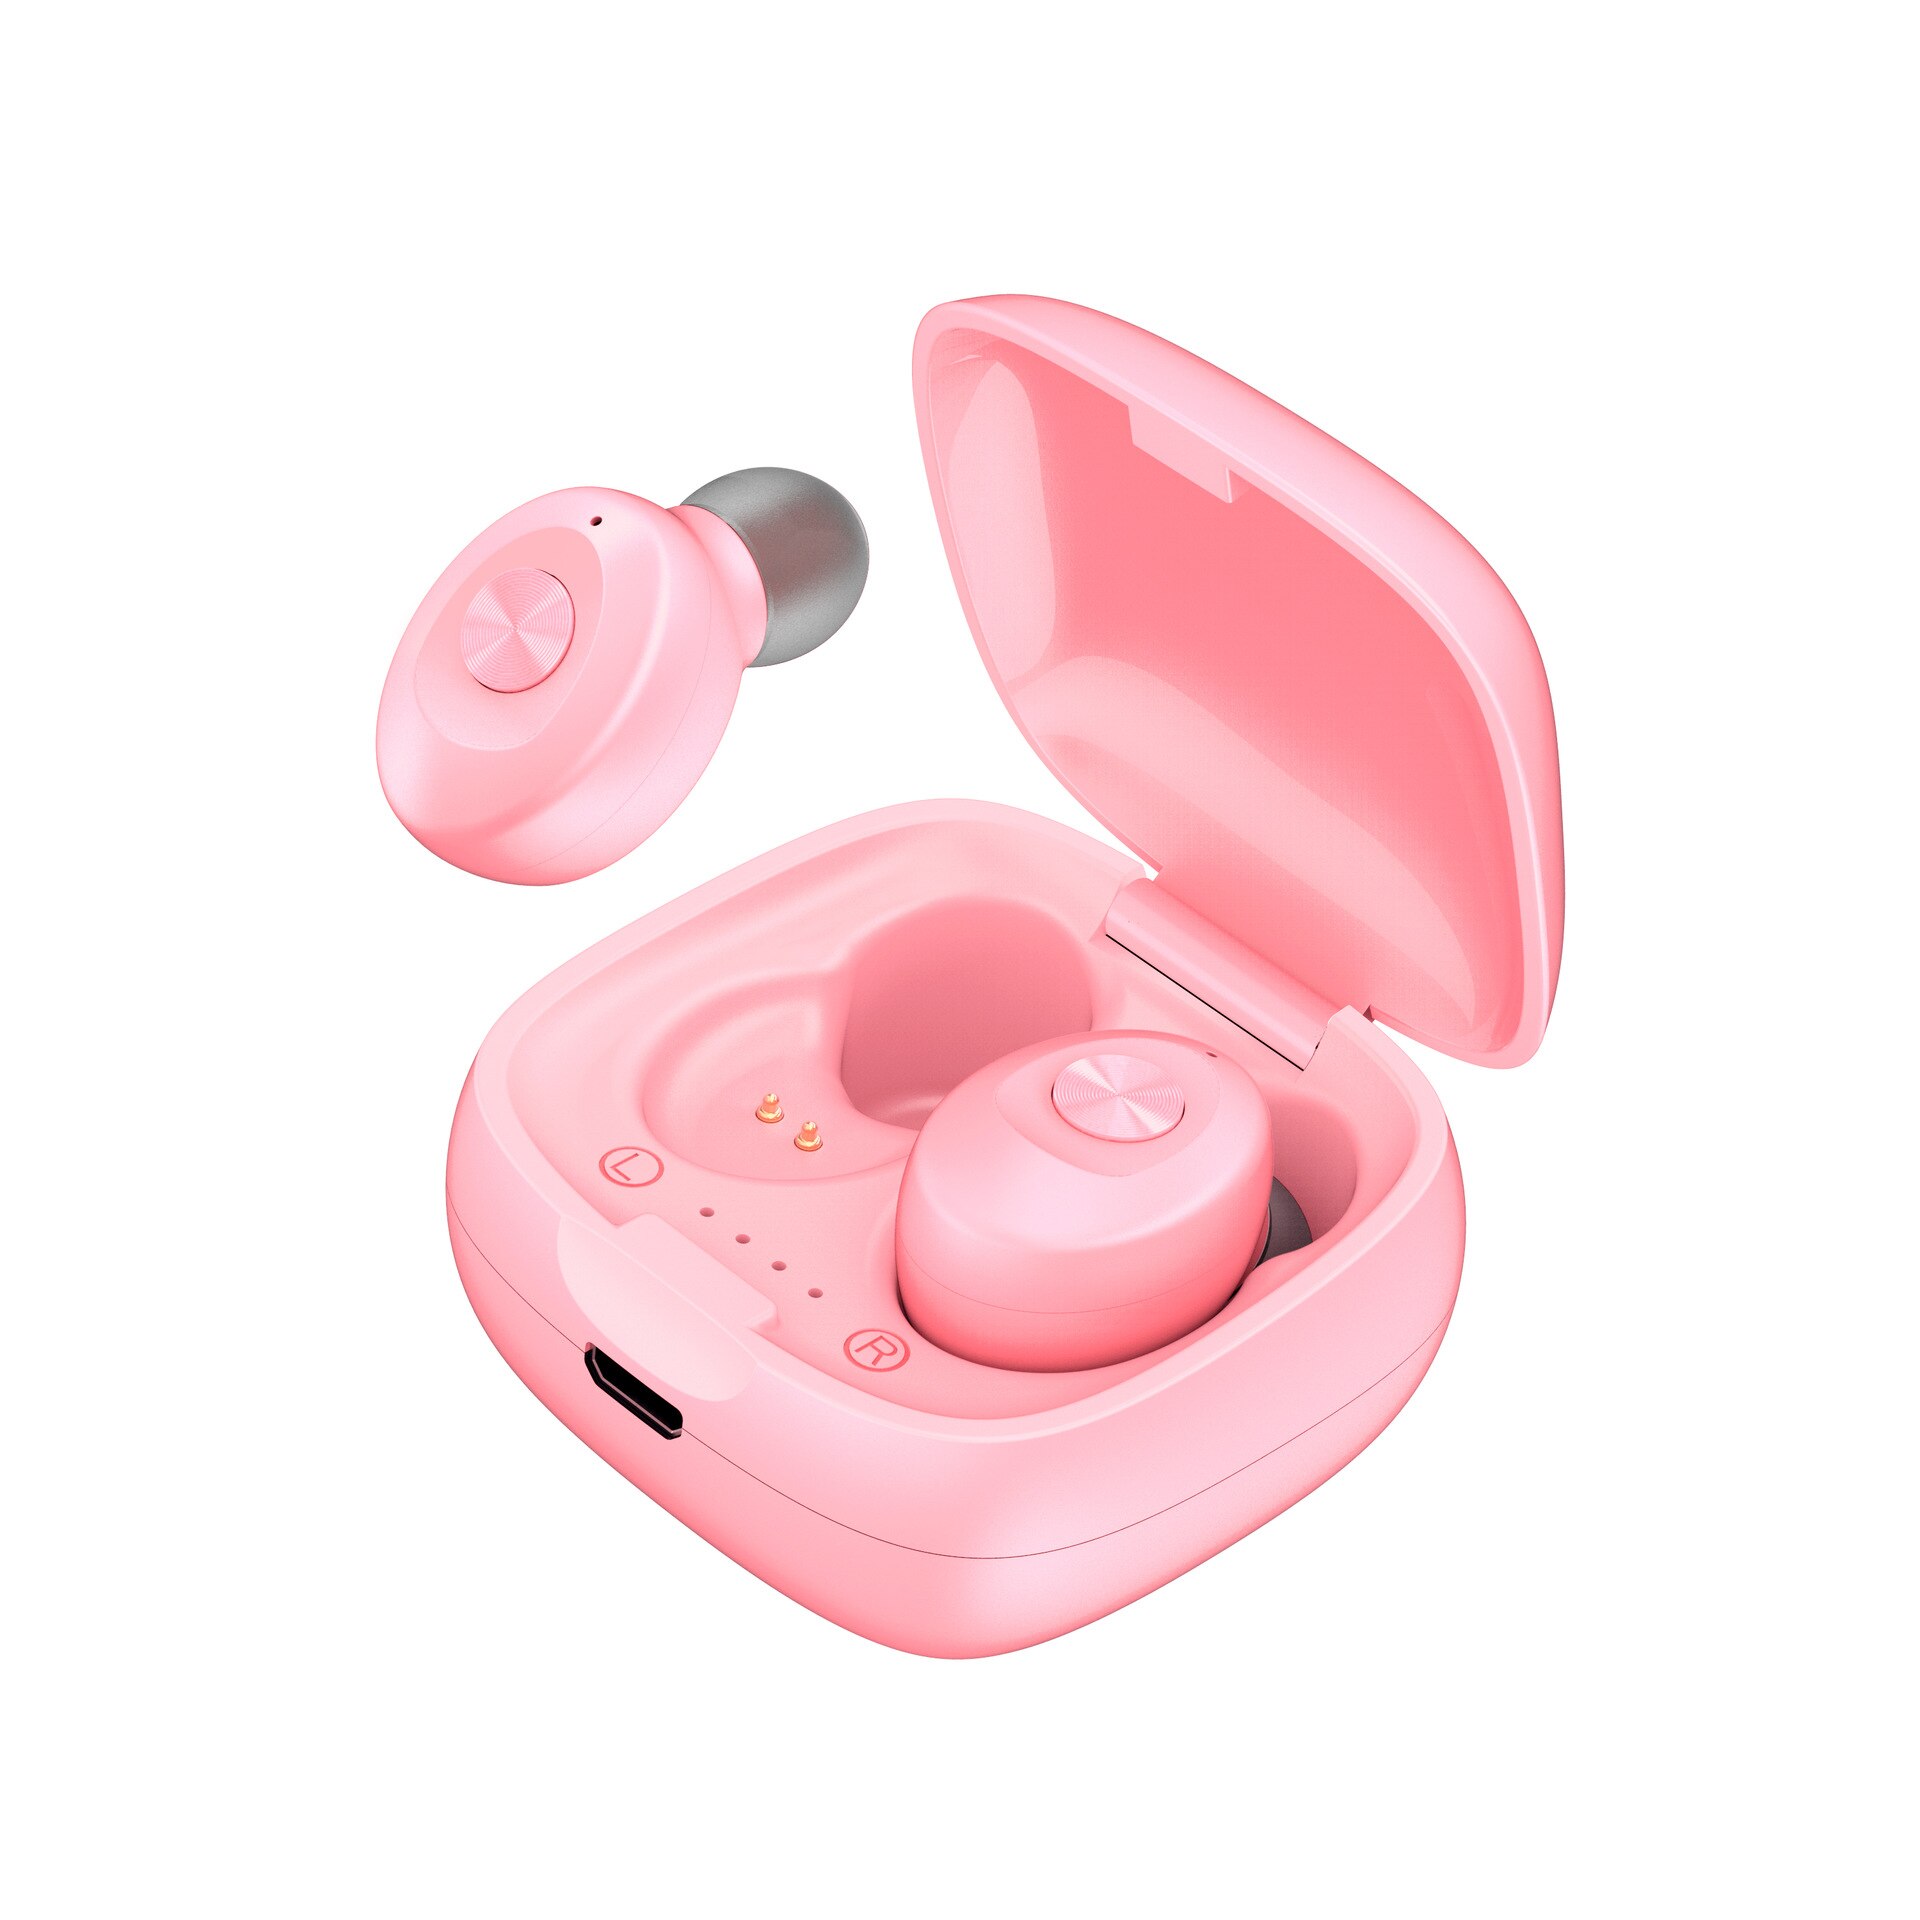 XG12 TWS Bluetooth 5.0 Earphone Stereo Wireless Earbus HIFI Sound Sport Earphones Handsfree Gaming Headset with Mic for Phone: XG12 pink